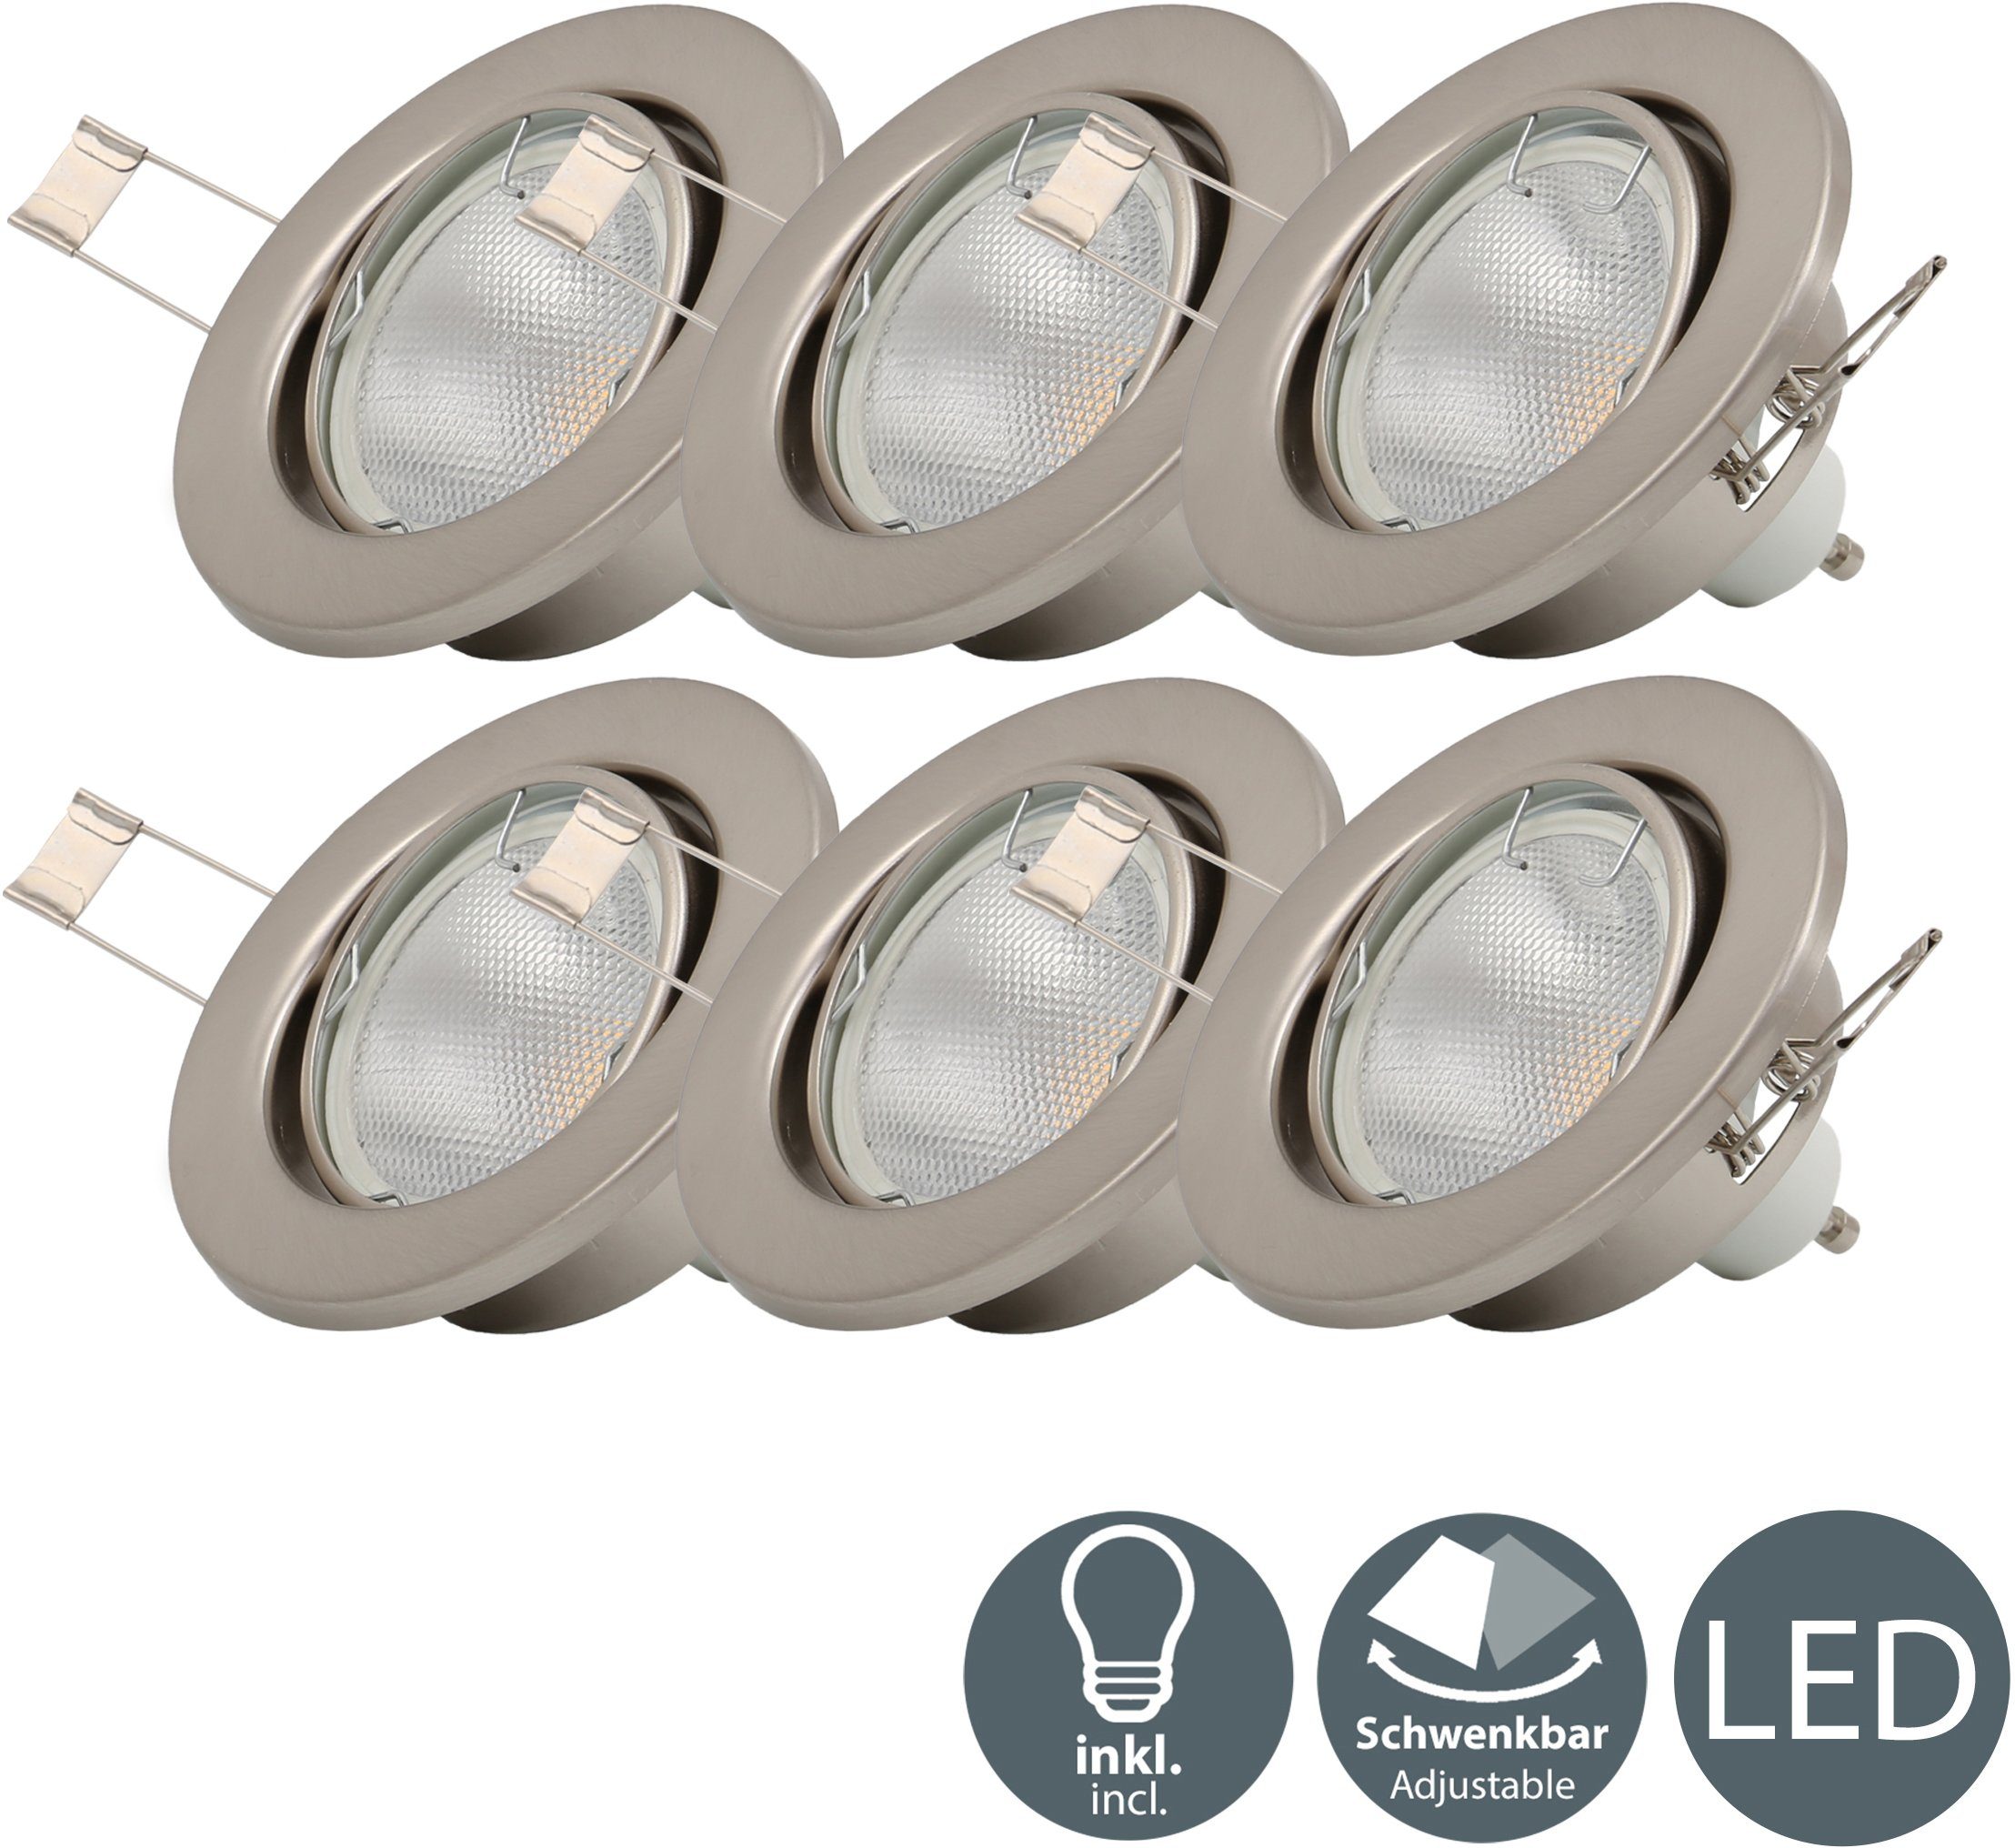 Einbaustrahler Spot Strahler Einbauspot 7W LED Einbaulampe Lampe Rahmen 104 